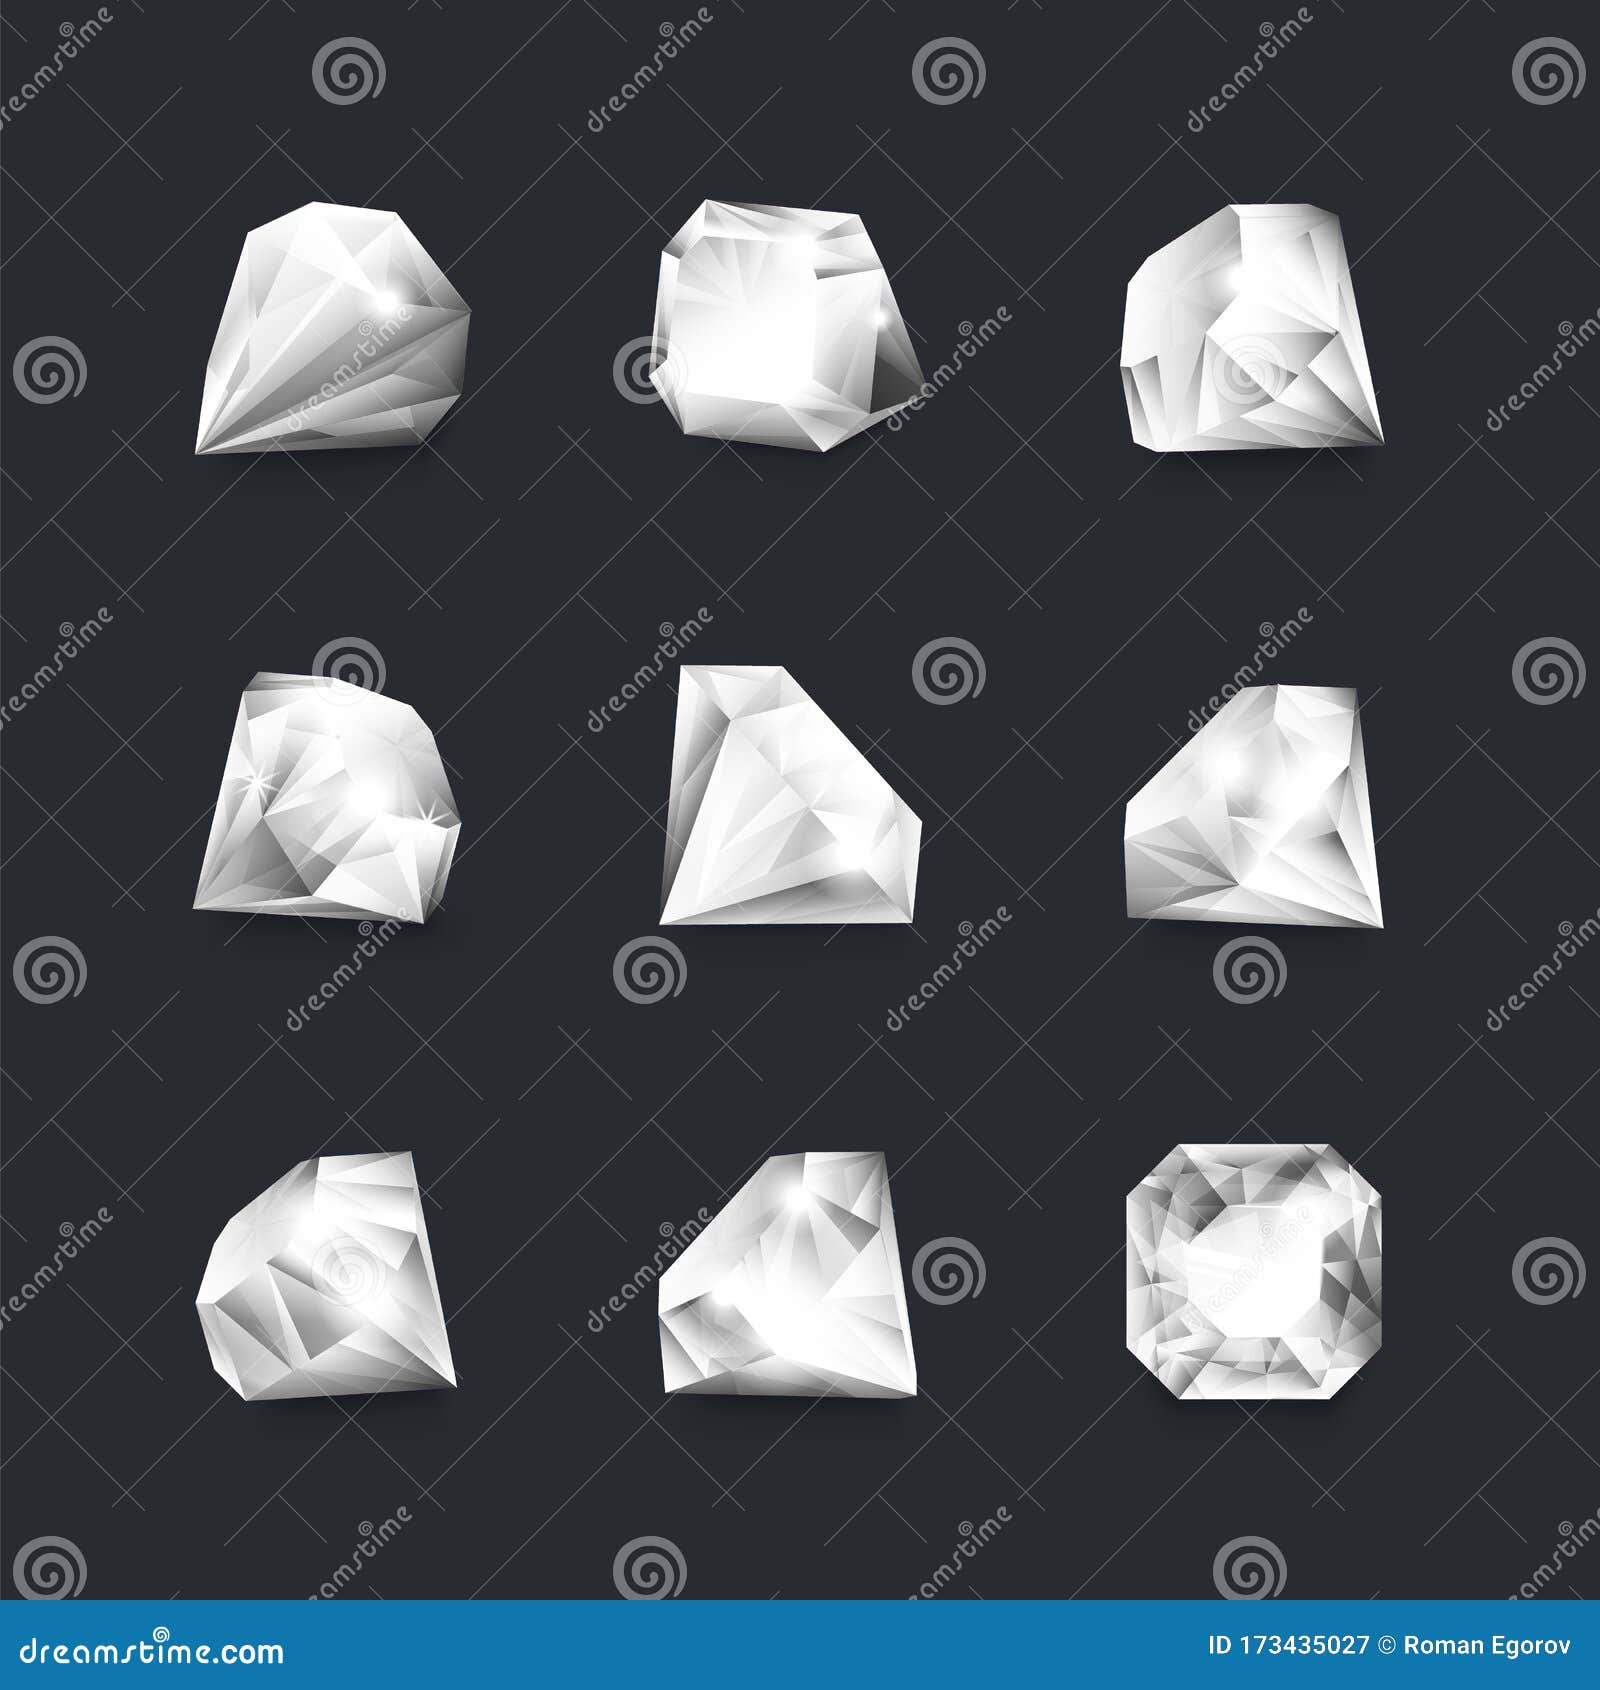 diamonds. realistic luxury jewel stones round  with shiny edges, 3d white diamonds  on black background